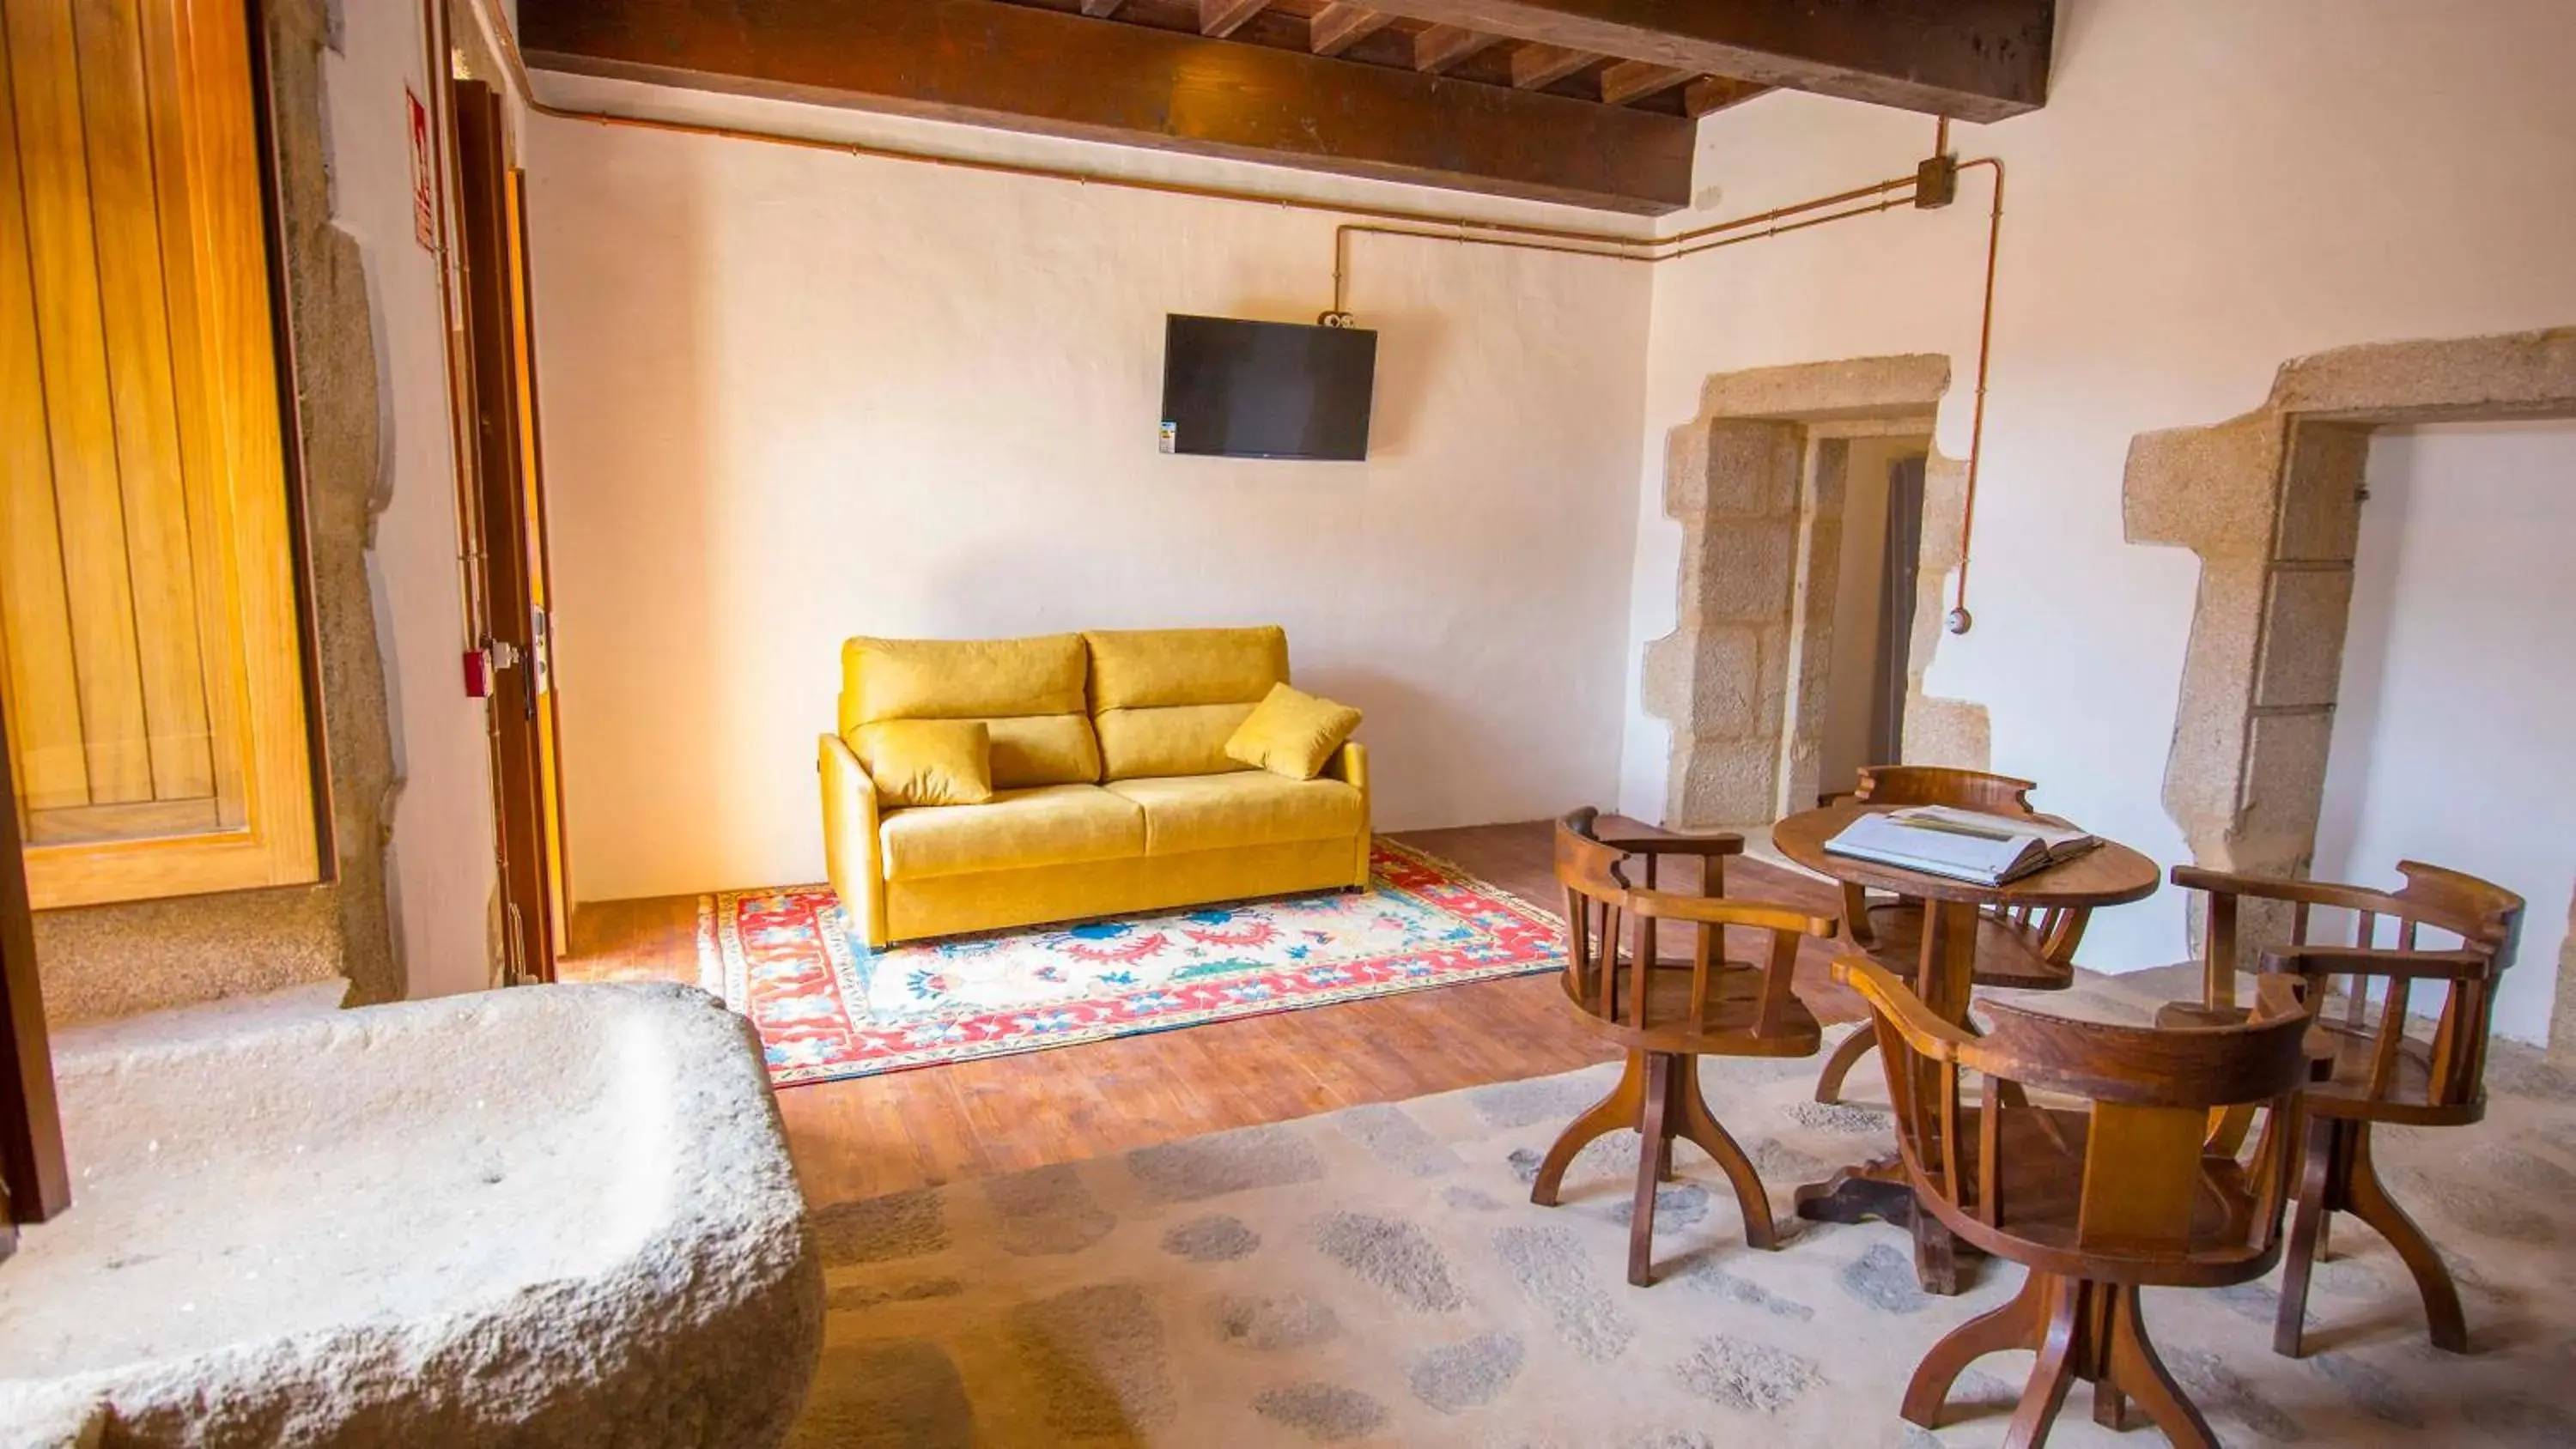 TV and multimedia, Seating Area in Hostel Monasterio de Moraime